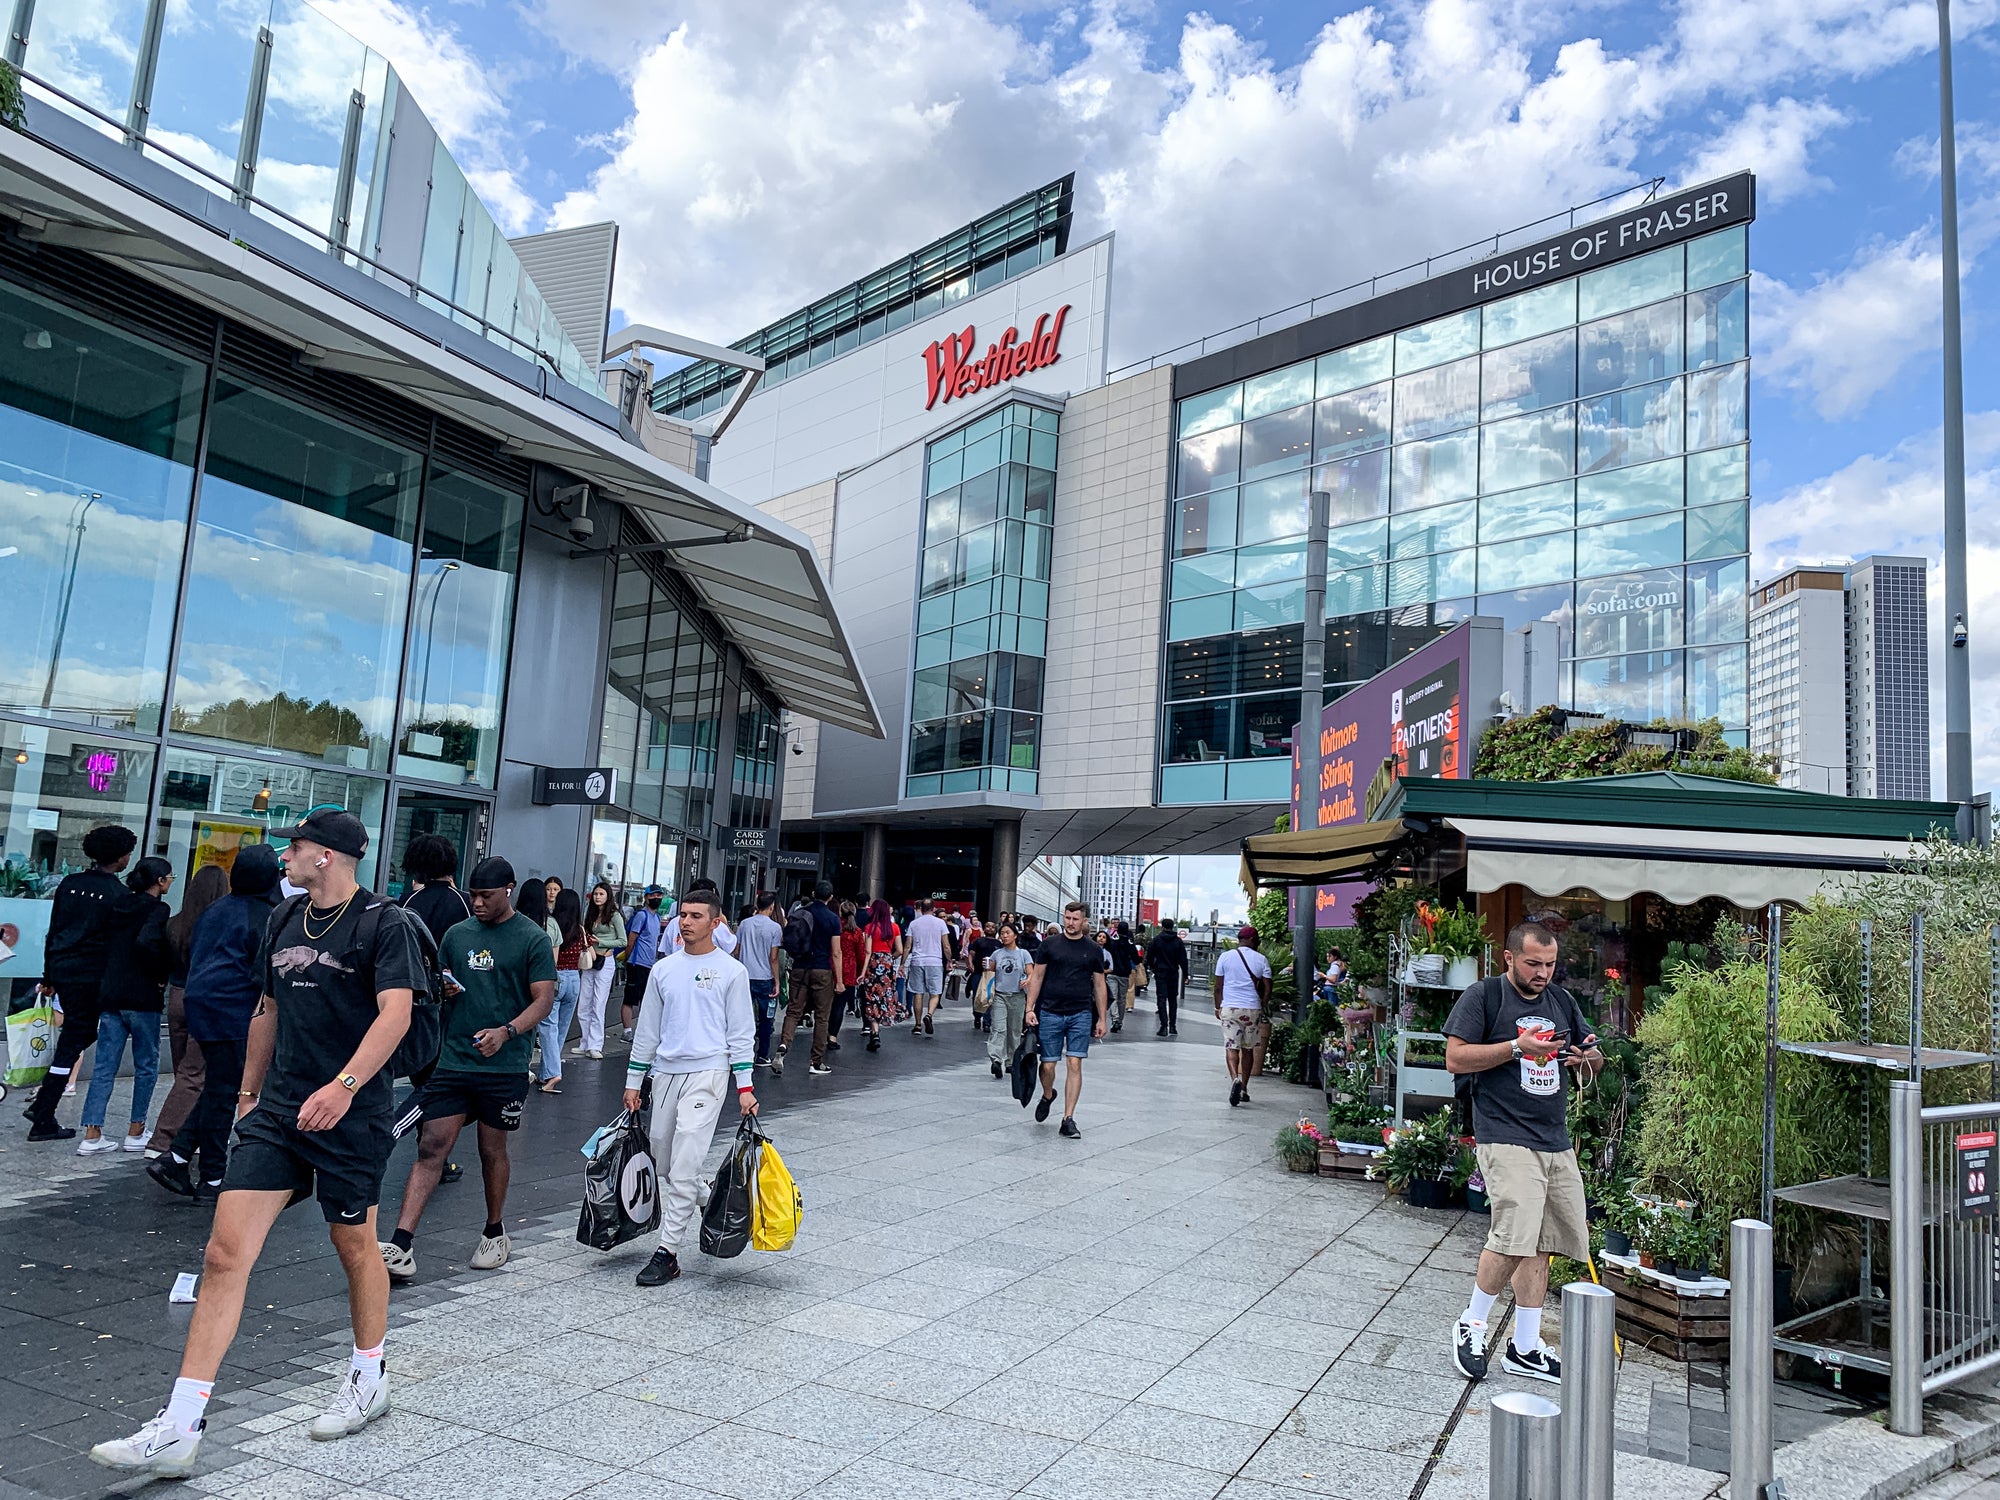 Westfield Shepherd’s Bush is Europe’s largest urban shopping centre